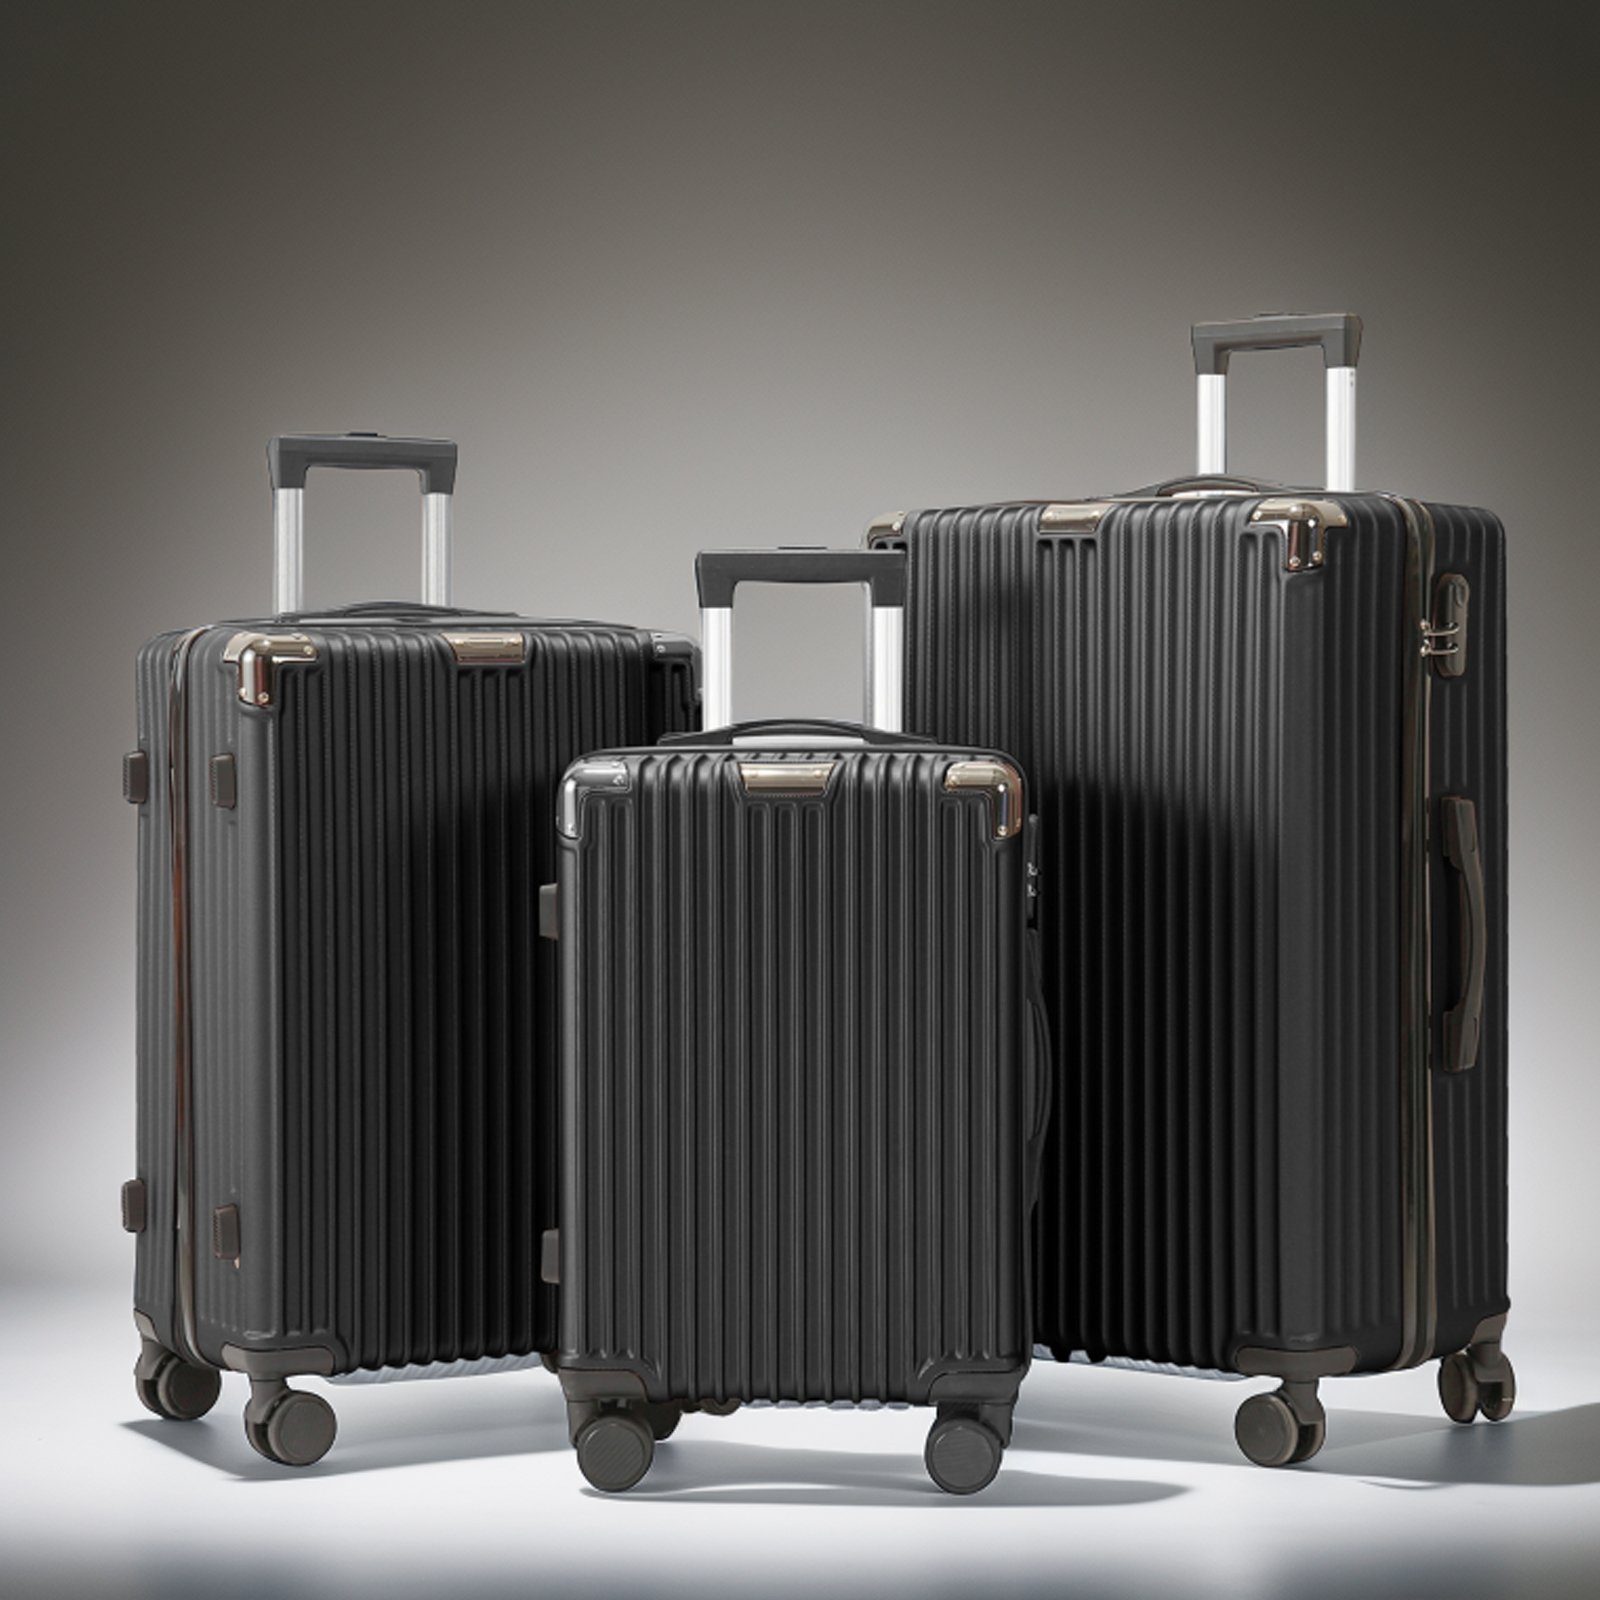 FUROKOY Kofferset 3-teiliges Set, Hartschalen-Handgepäck ABS-Material, , Rollkoffer, Reisekoffer mit Zahlenschloss schwarz